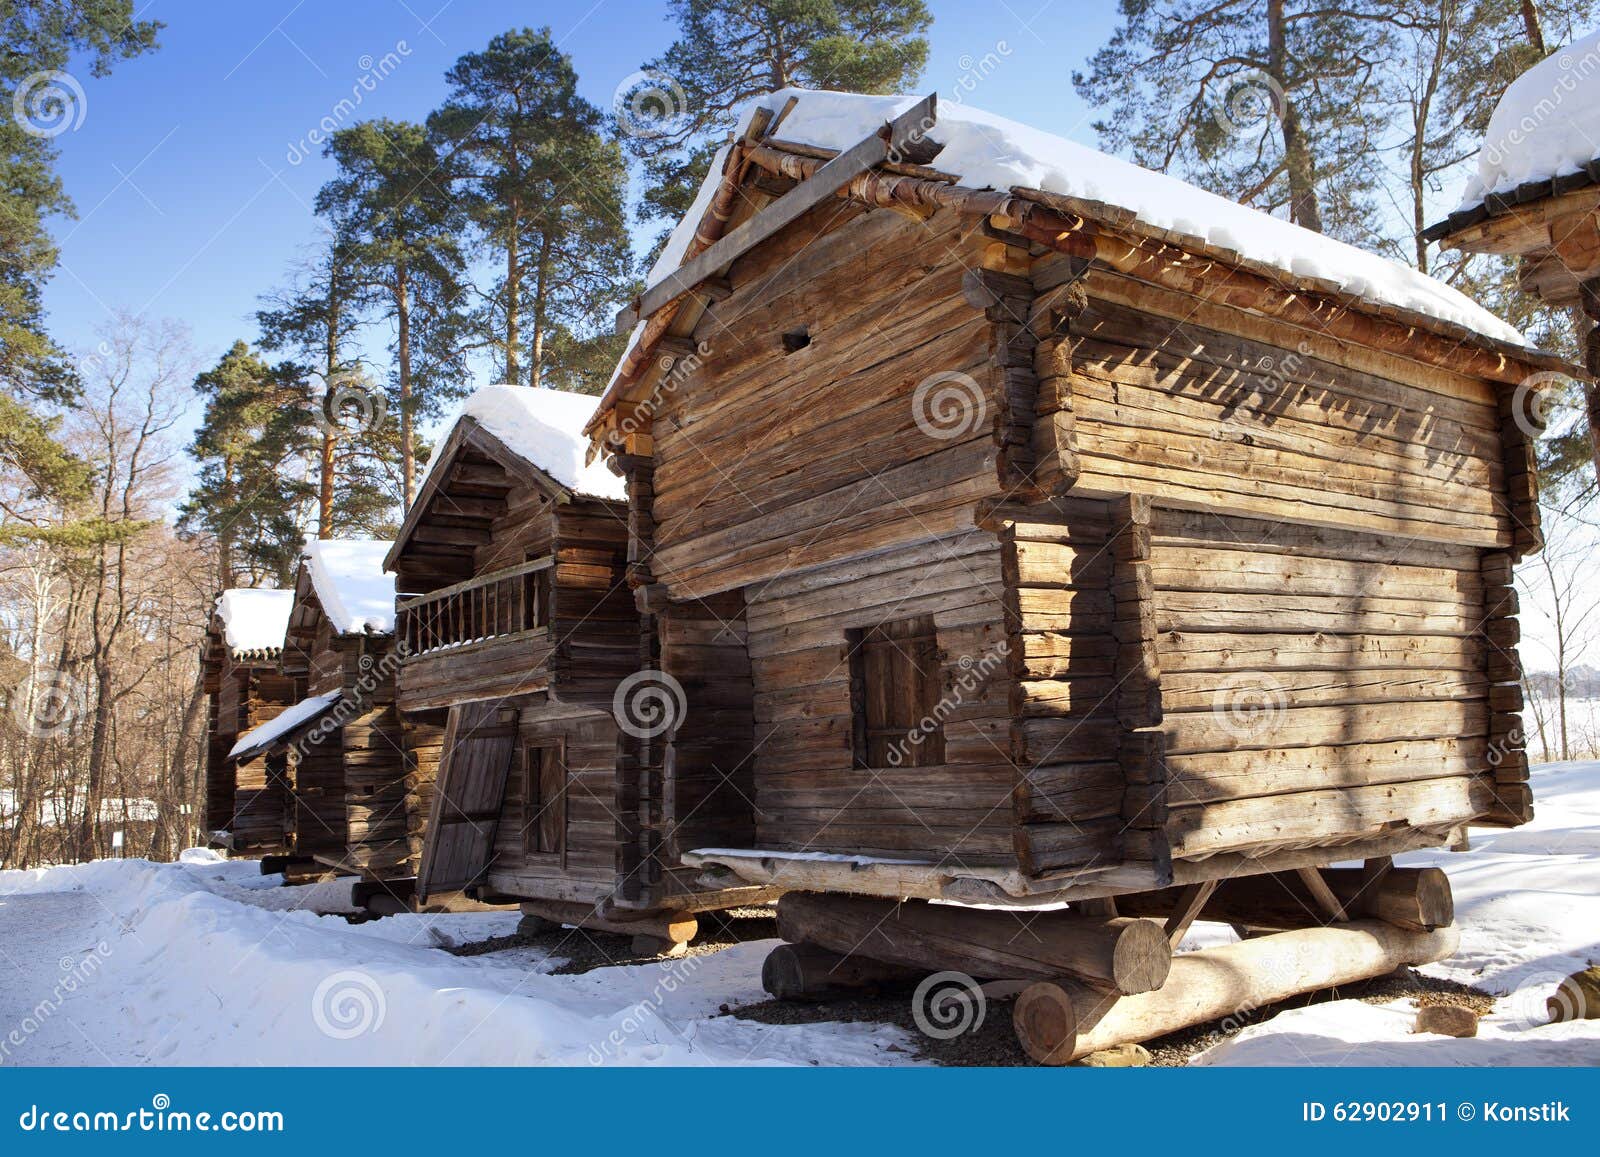 rustic wooden house open air museum seurasaari island helsinki finland 62902911